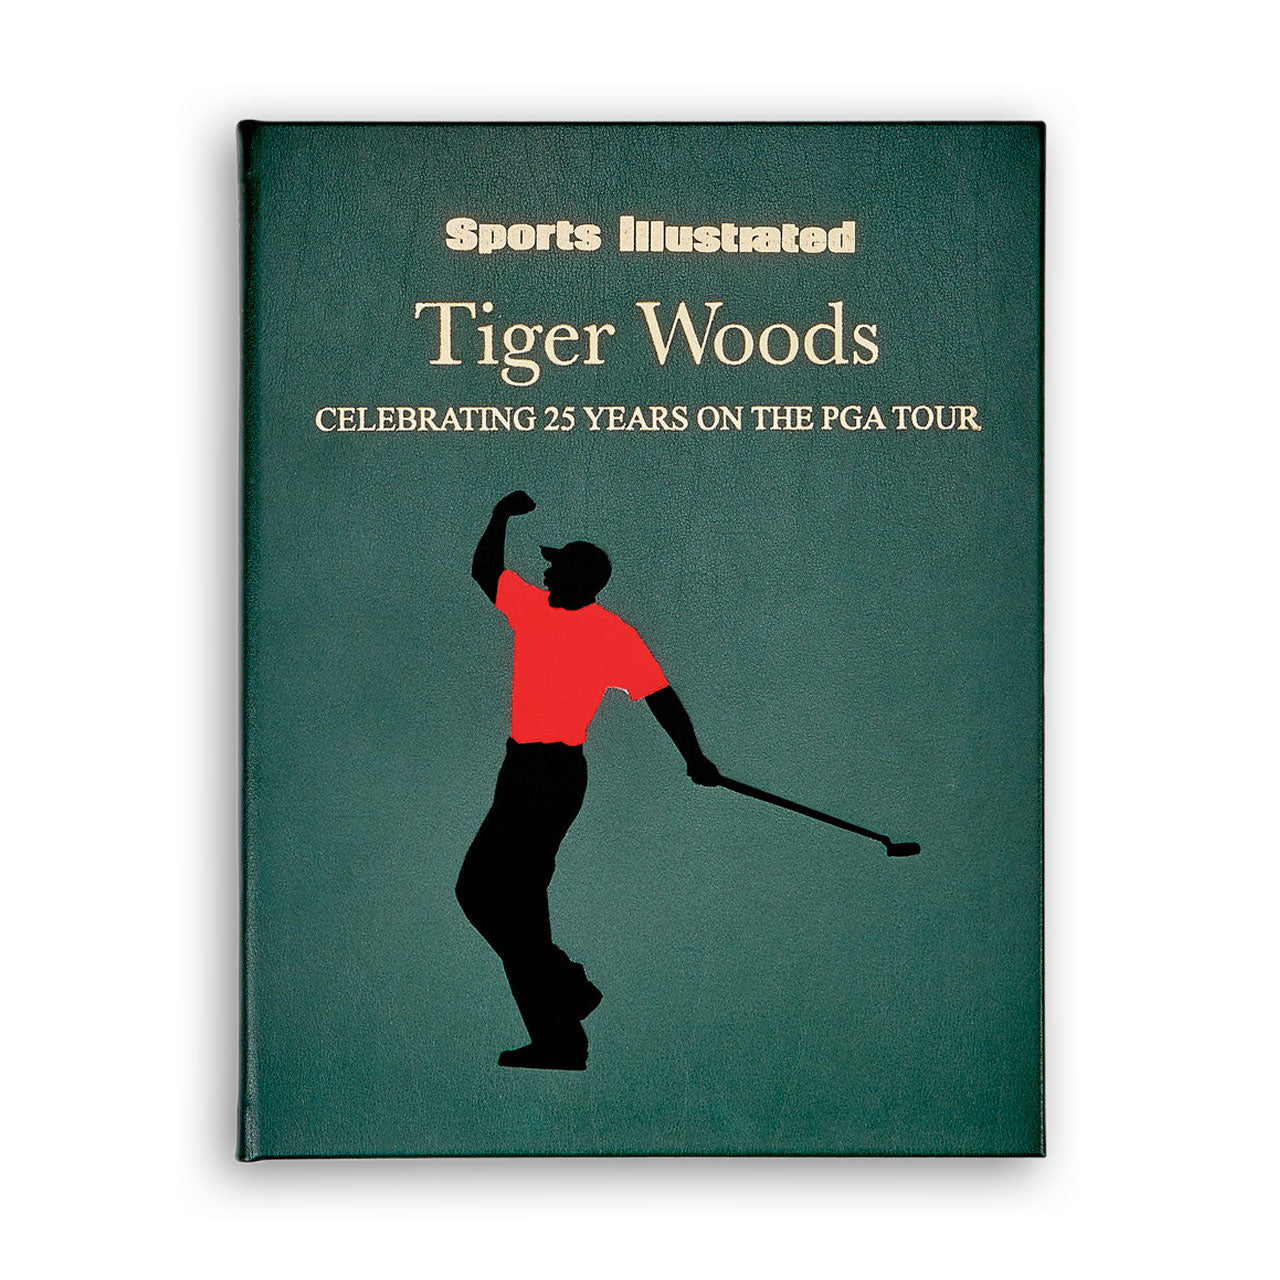 Tiger Woods: Celebrating 25 Years On The PGA Tour, #Tiger #Woods #Celebrating #Years #PGA #Tour